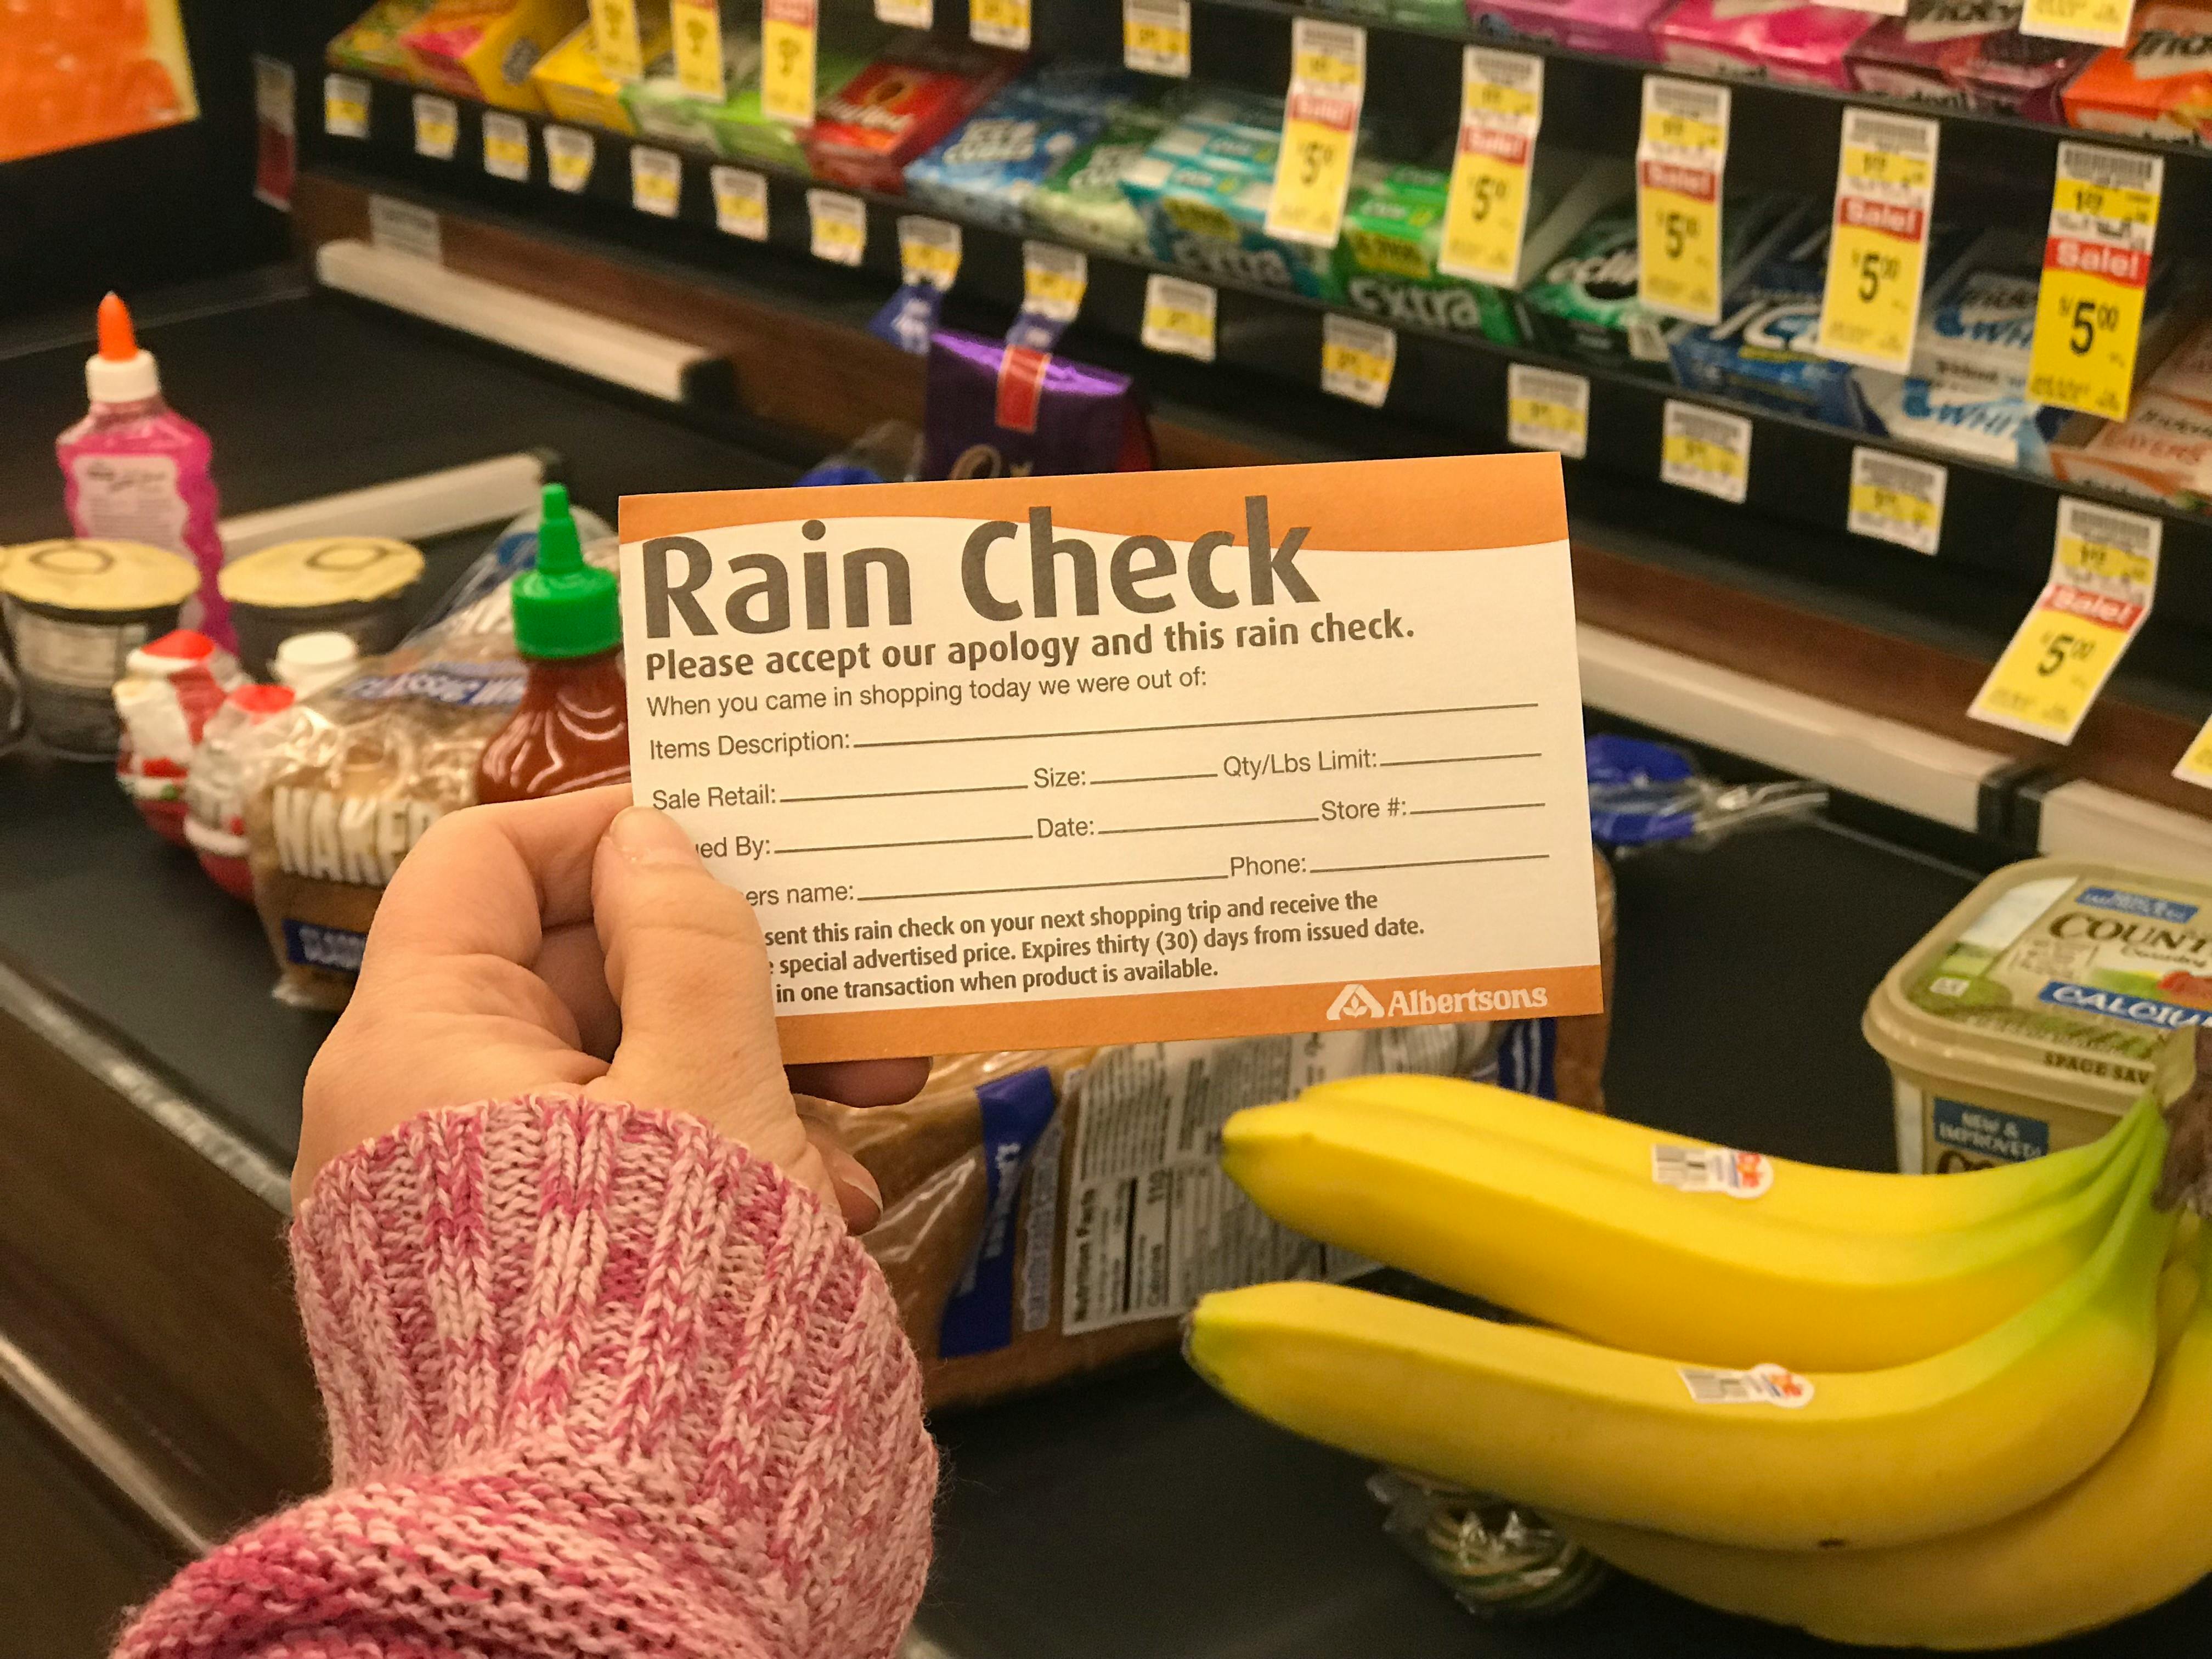 Take a rain check. Rain check. Take a Rain check идиома. Rain check перевод. Rain check купон магазина.